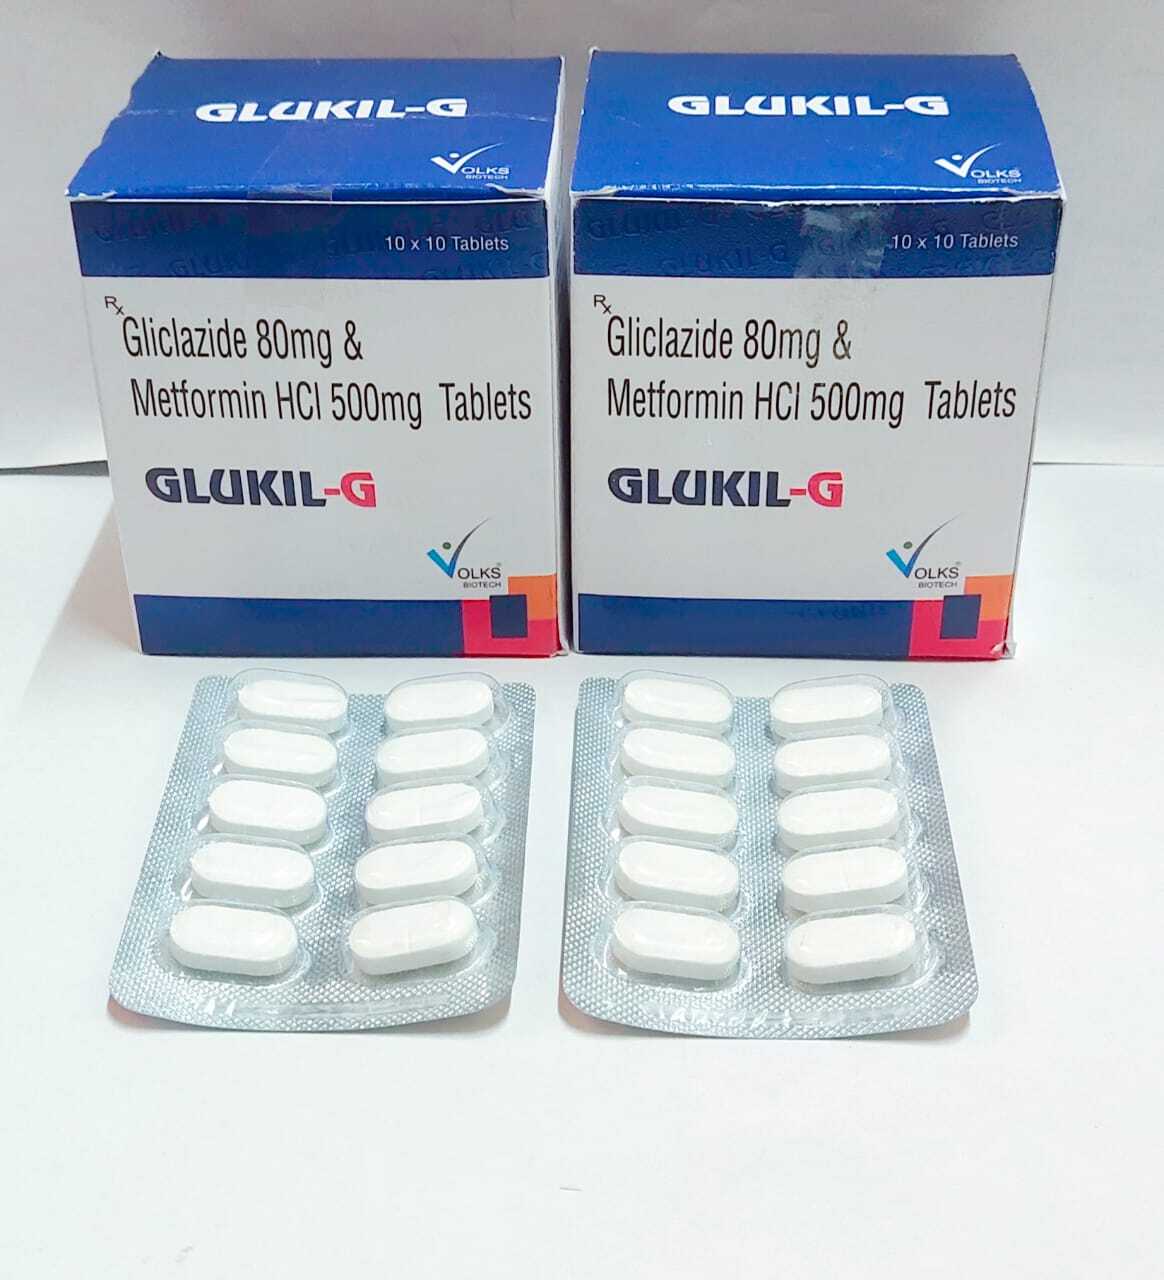 Gliclazide and Metformin HCI Tablets